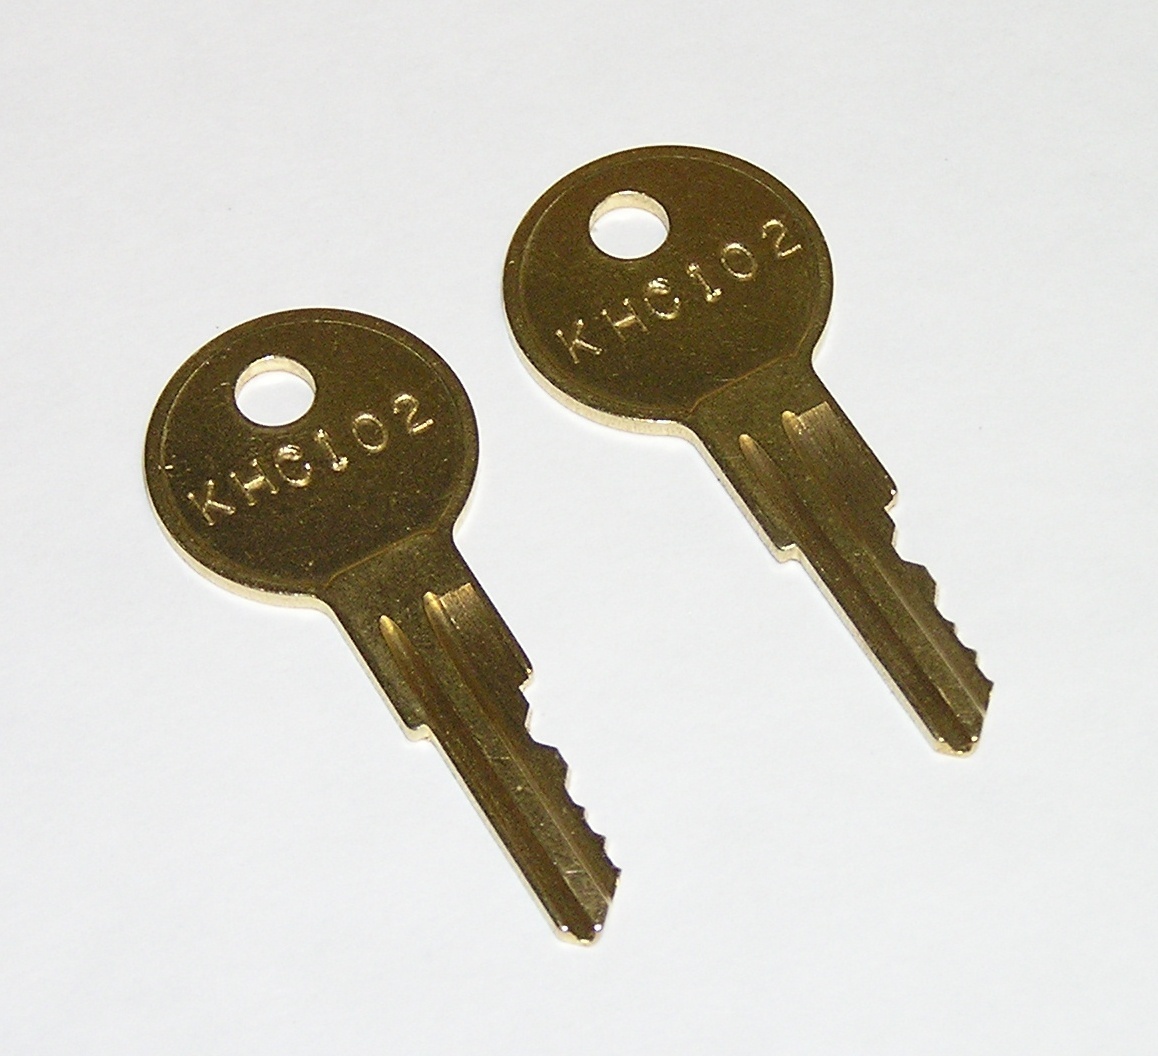 2 - KHC102 Replacement Keys fit Kason, Kolpak, Norlake Refrigeration Equipment - $10.99